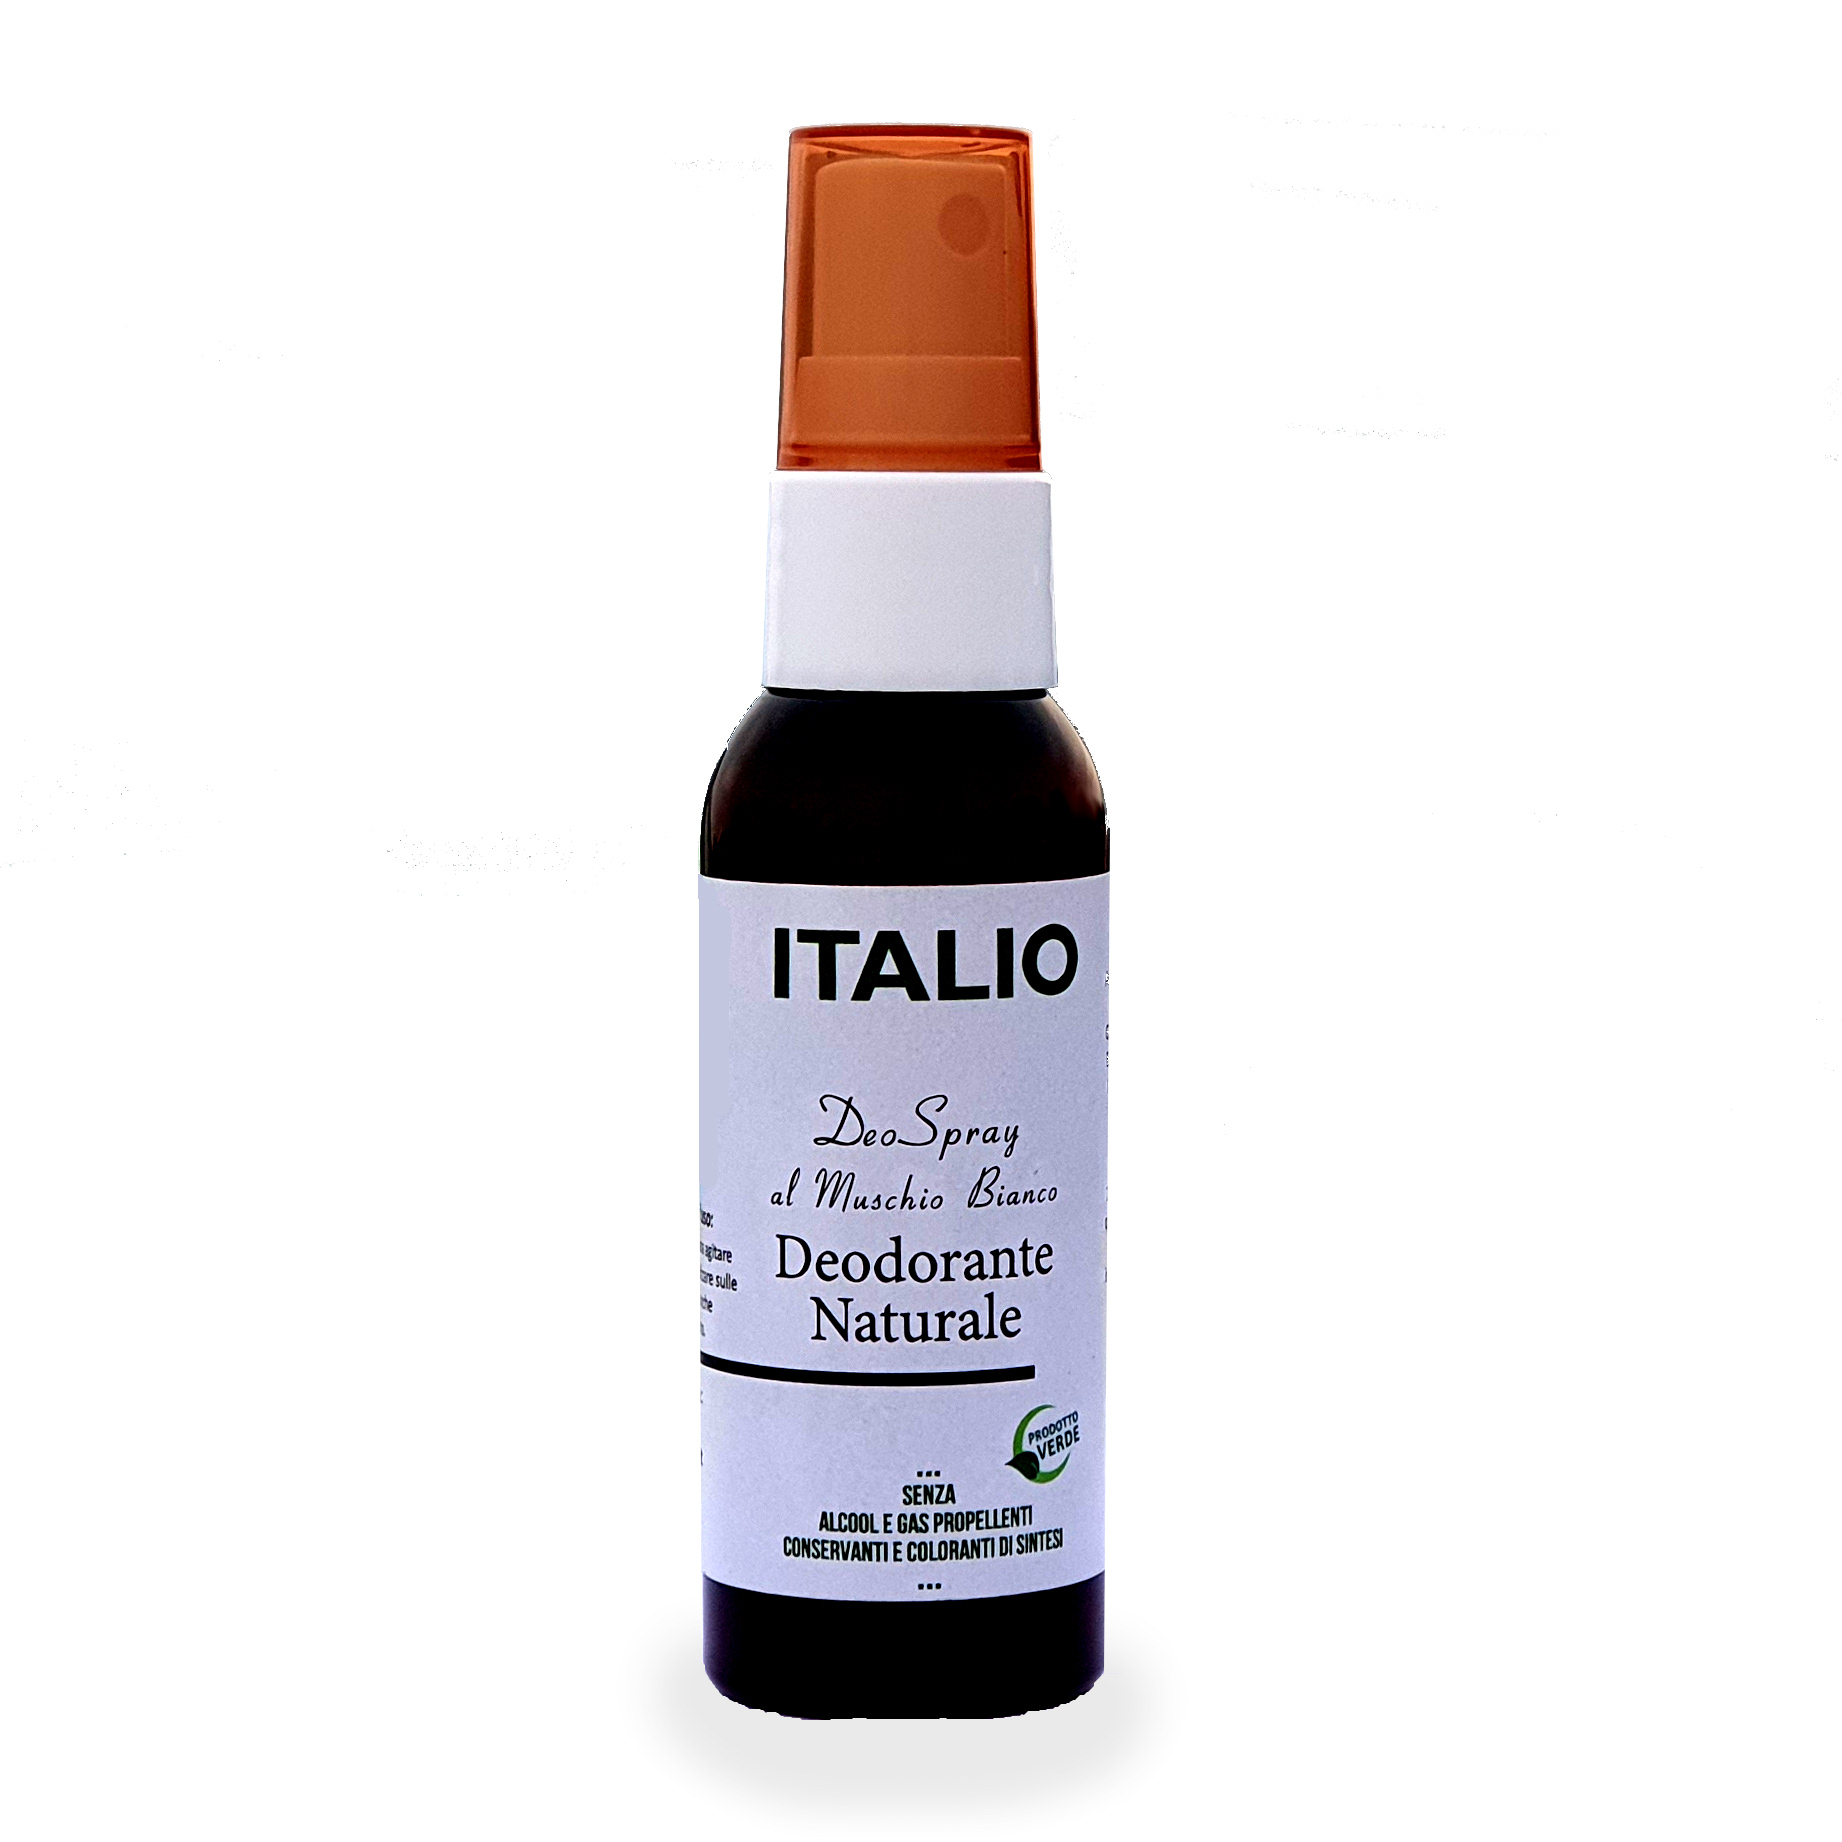 Deodorante Naturale spray al Muschio bianco ITALIO 50ml